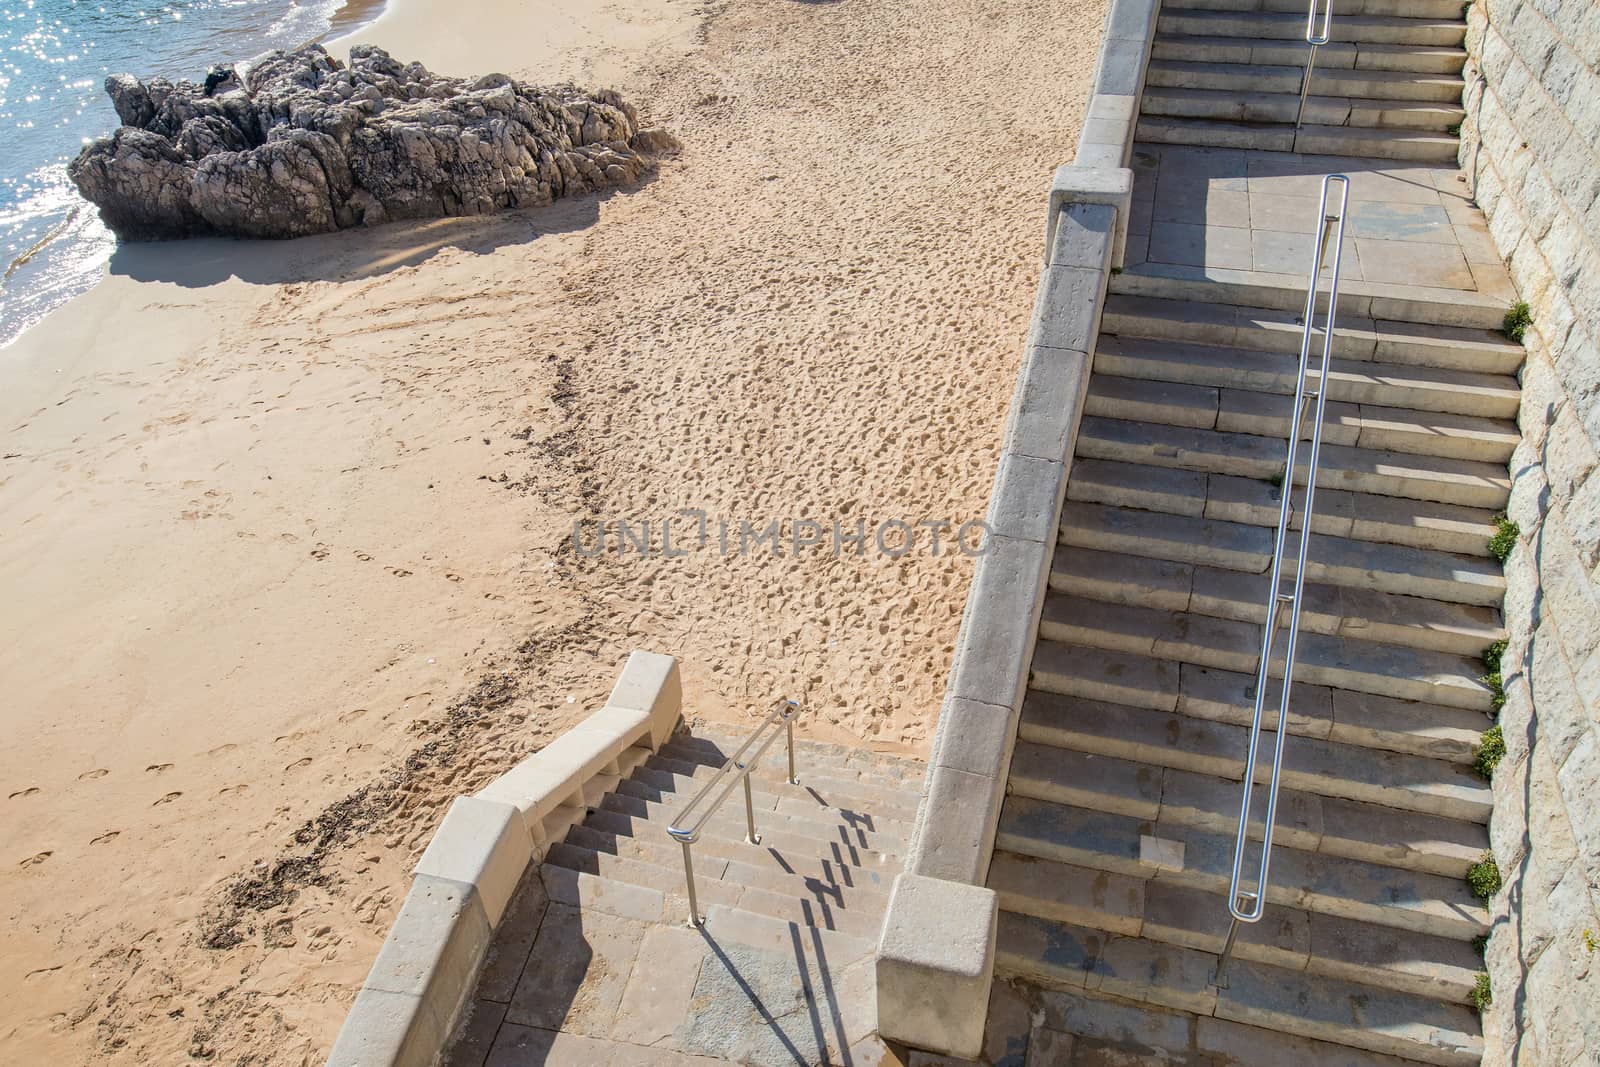 Stairway to the beach by noimagination